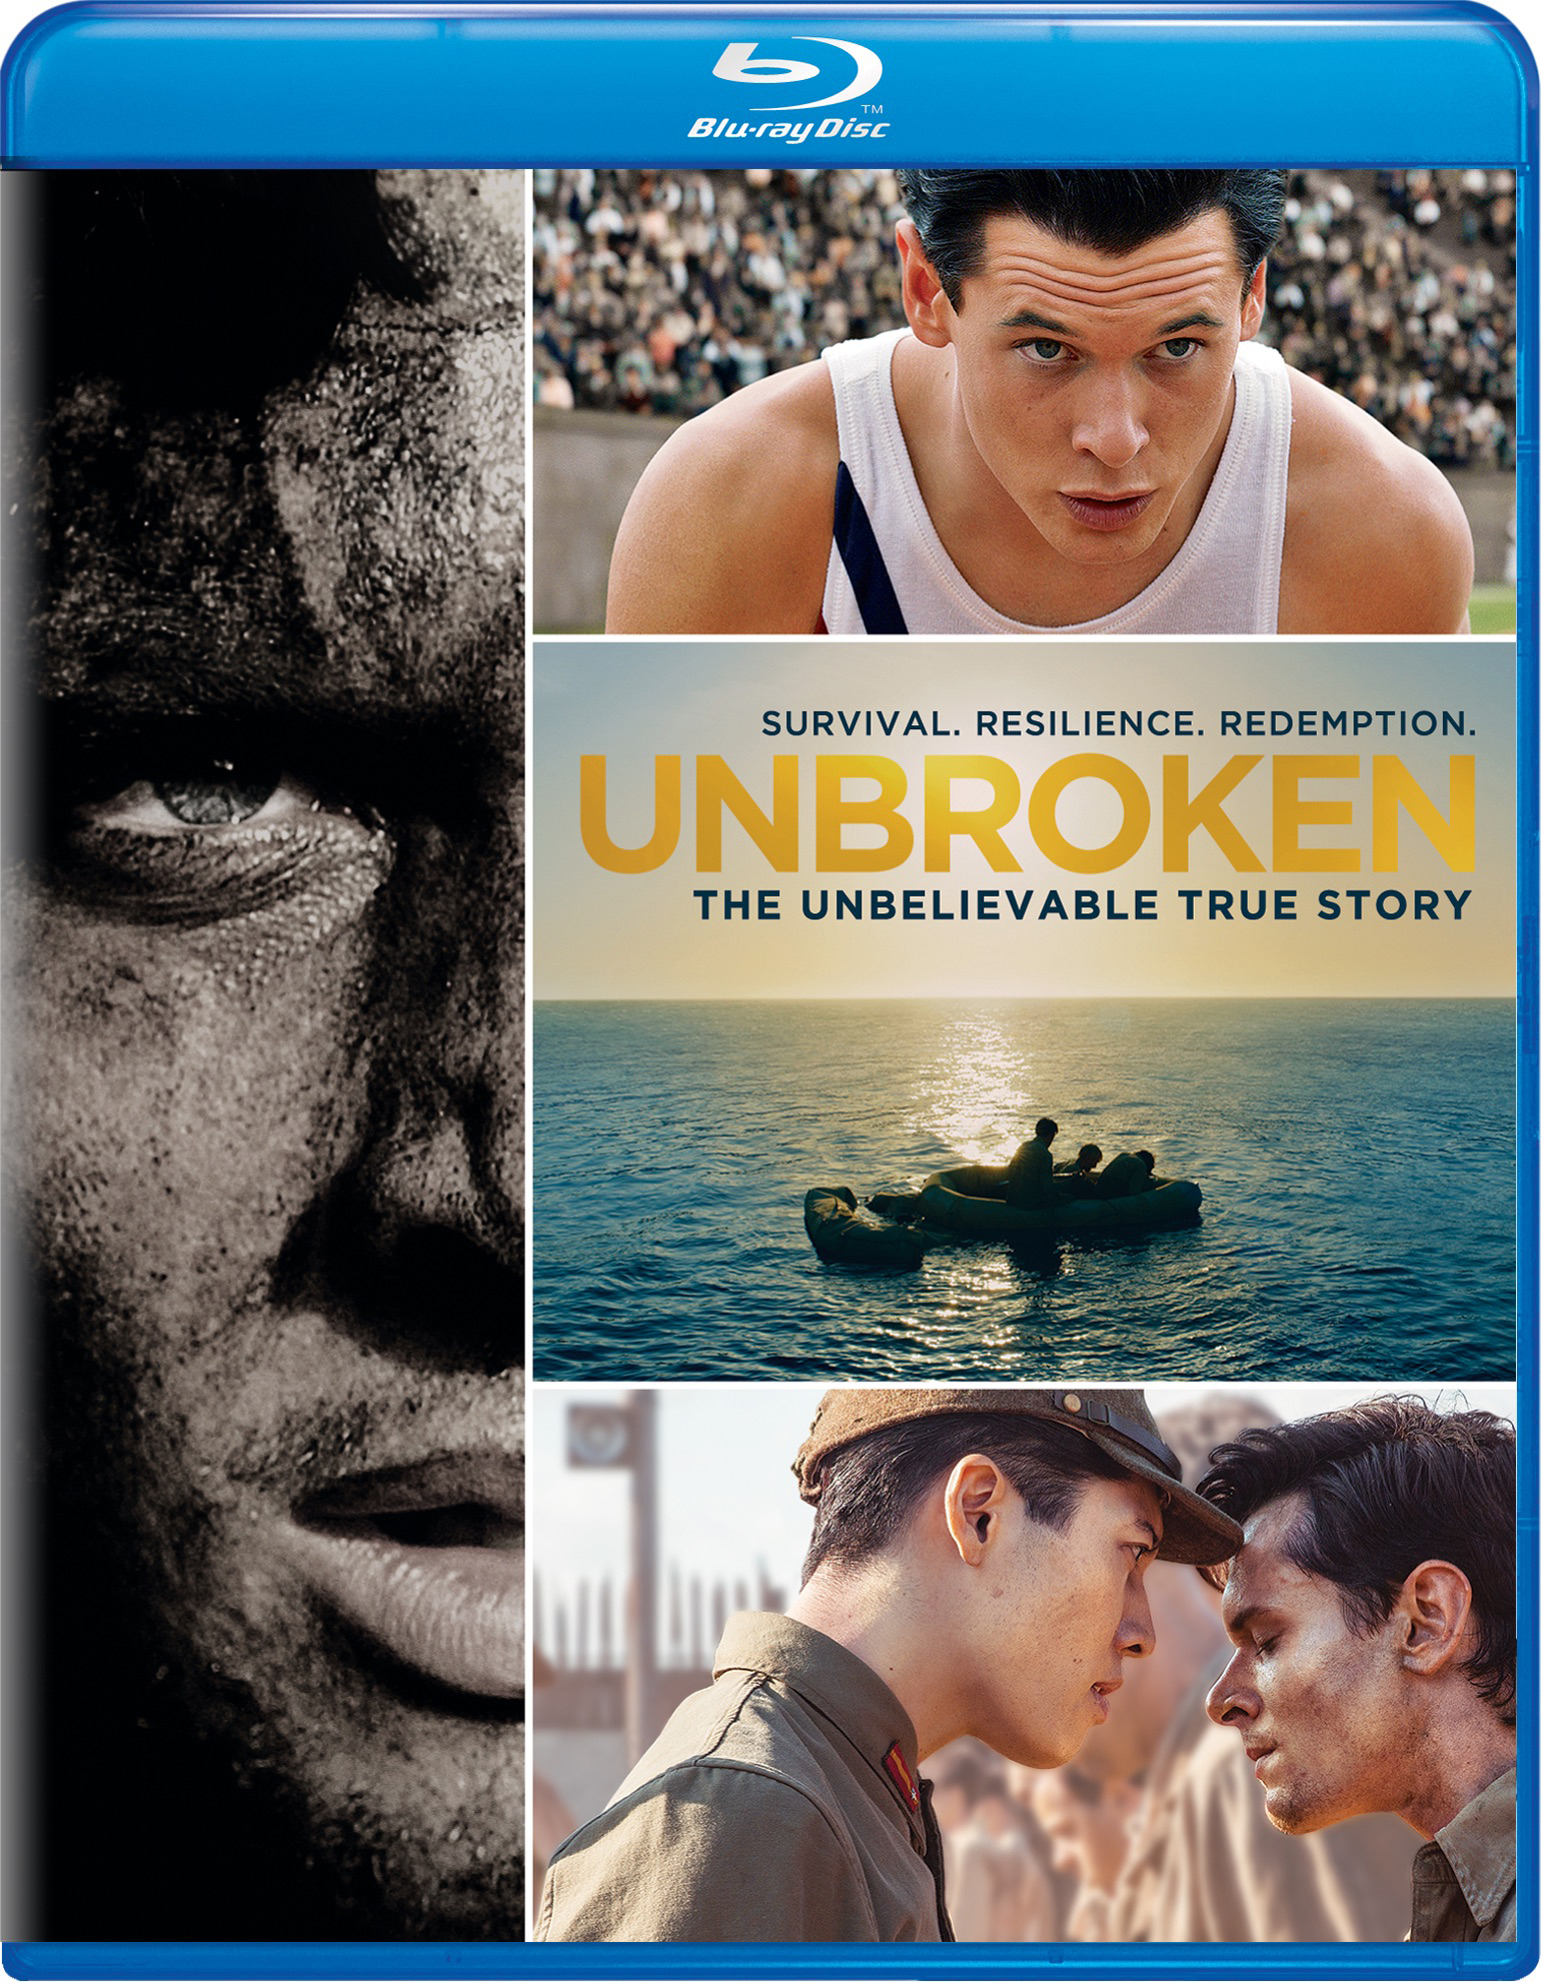 Unbroken (Blu-ray New Box Art) - Blu-ray [ 2014 ]  - War Movies On Blu-ray - Movies On GRUV